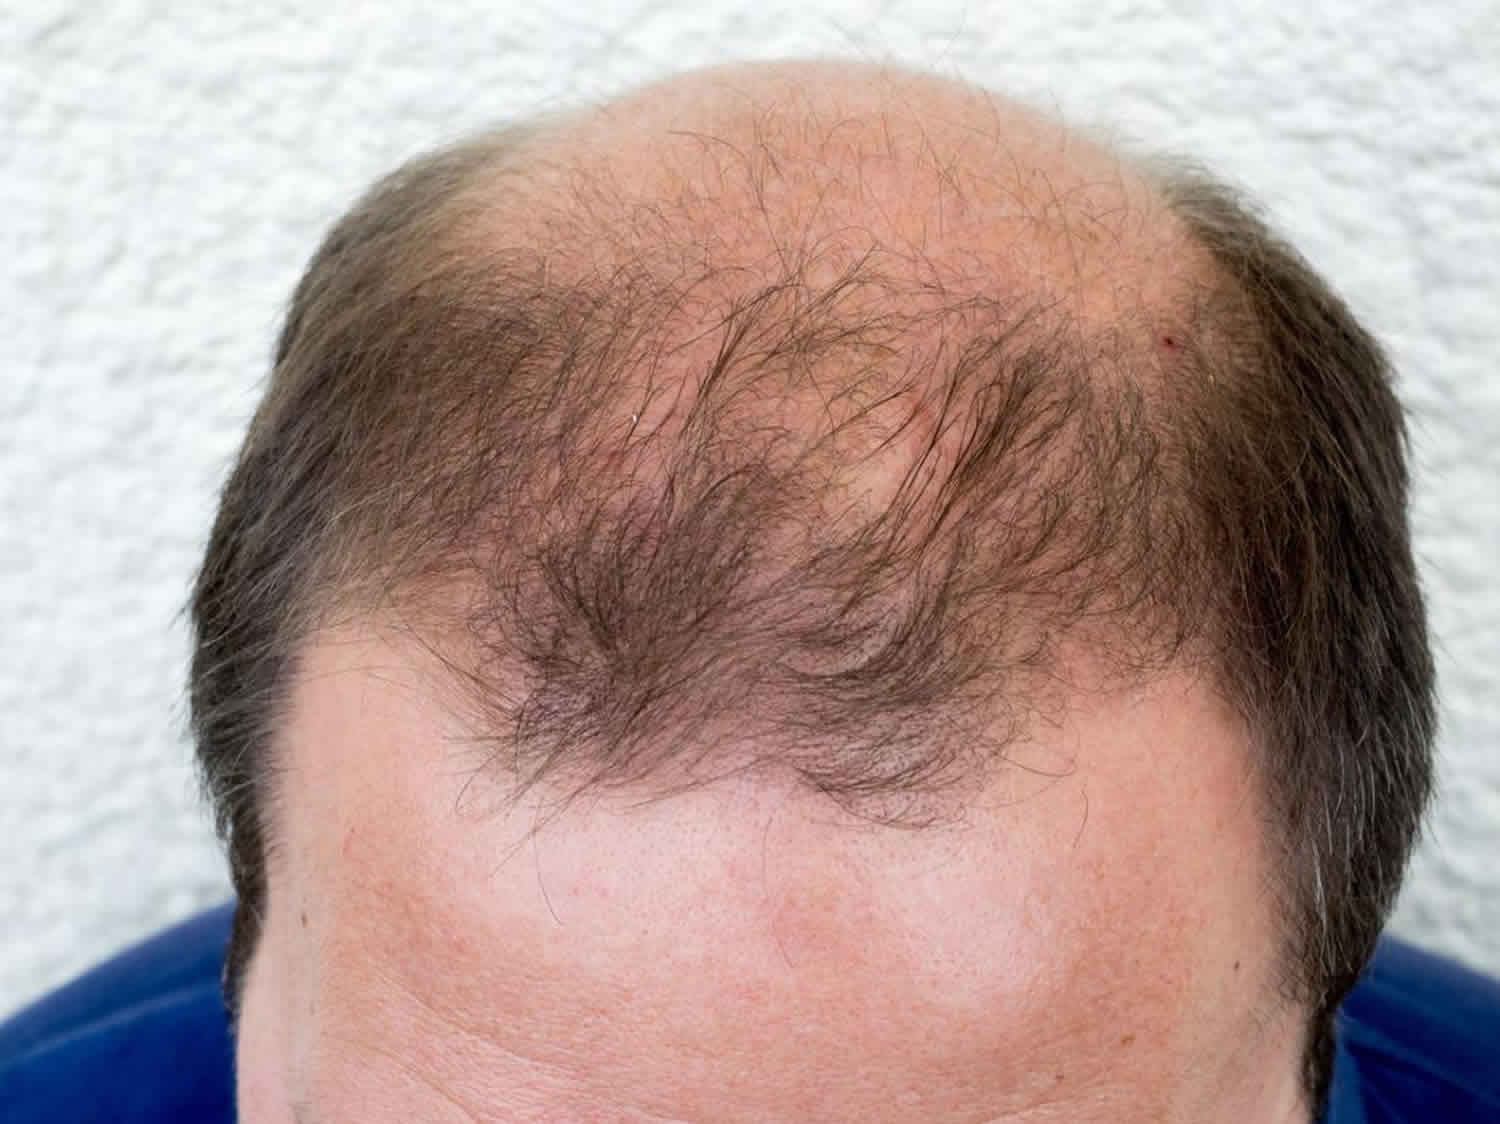 Hair Regrowth For Men at Desertcart